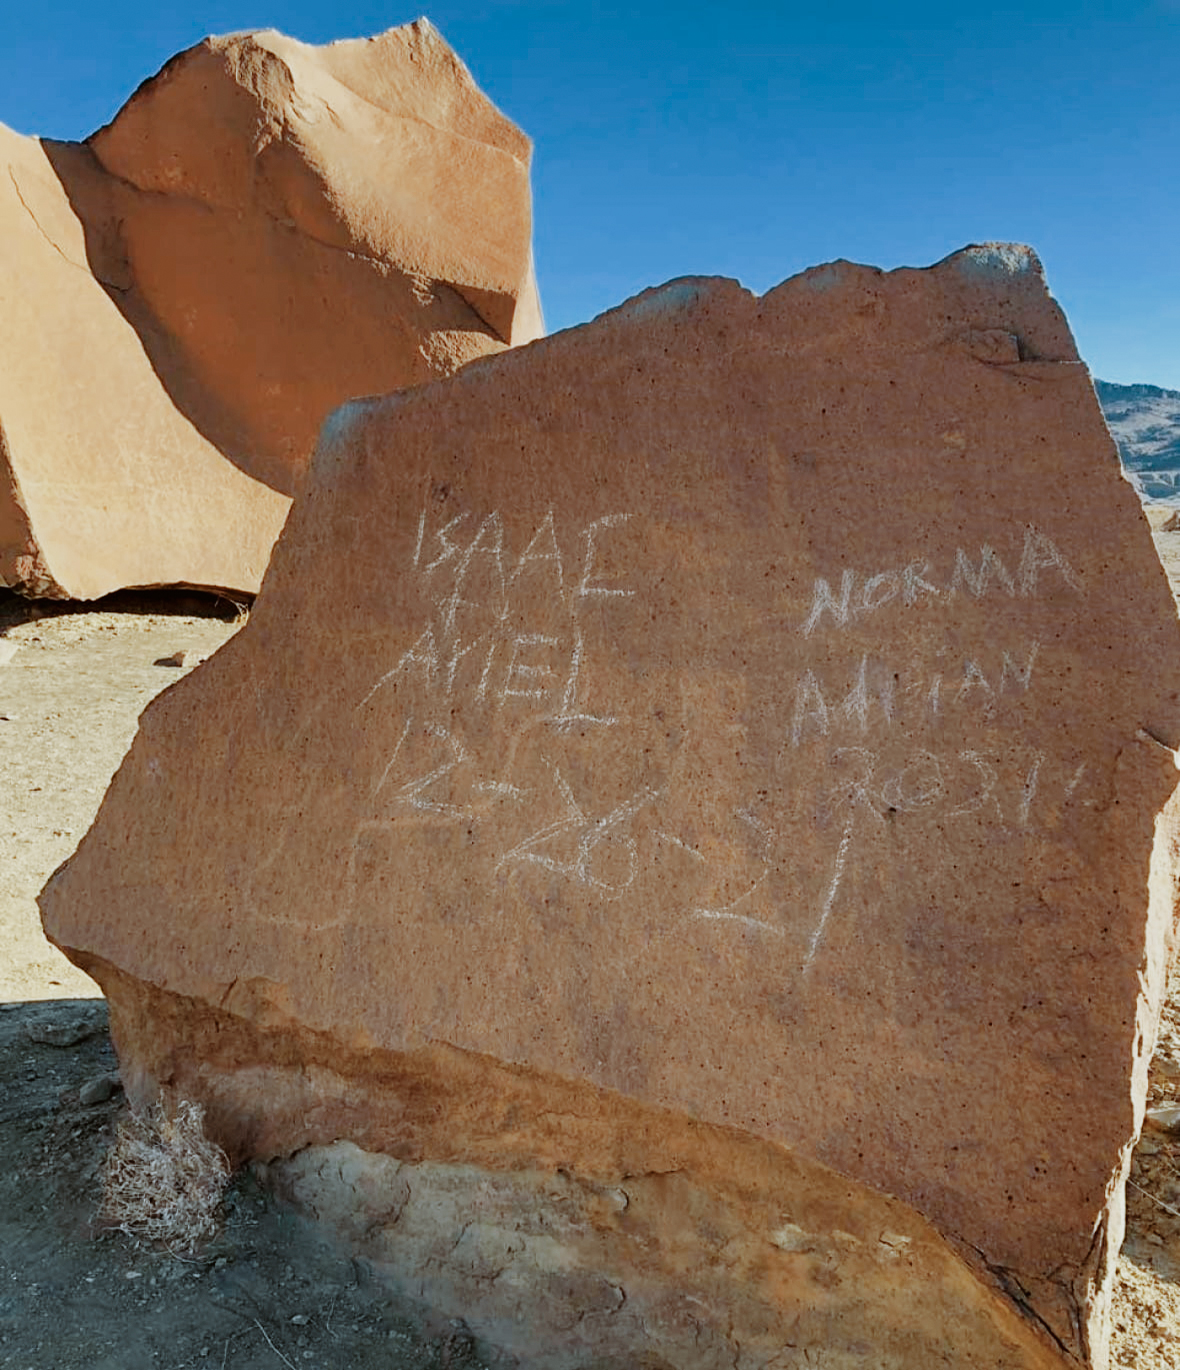 Vandals Graffiti Scratched Damage Texas Johannes Loubser Etchings Petroglyphs Rock Art Network Archaeology Bradshaw Foundation